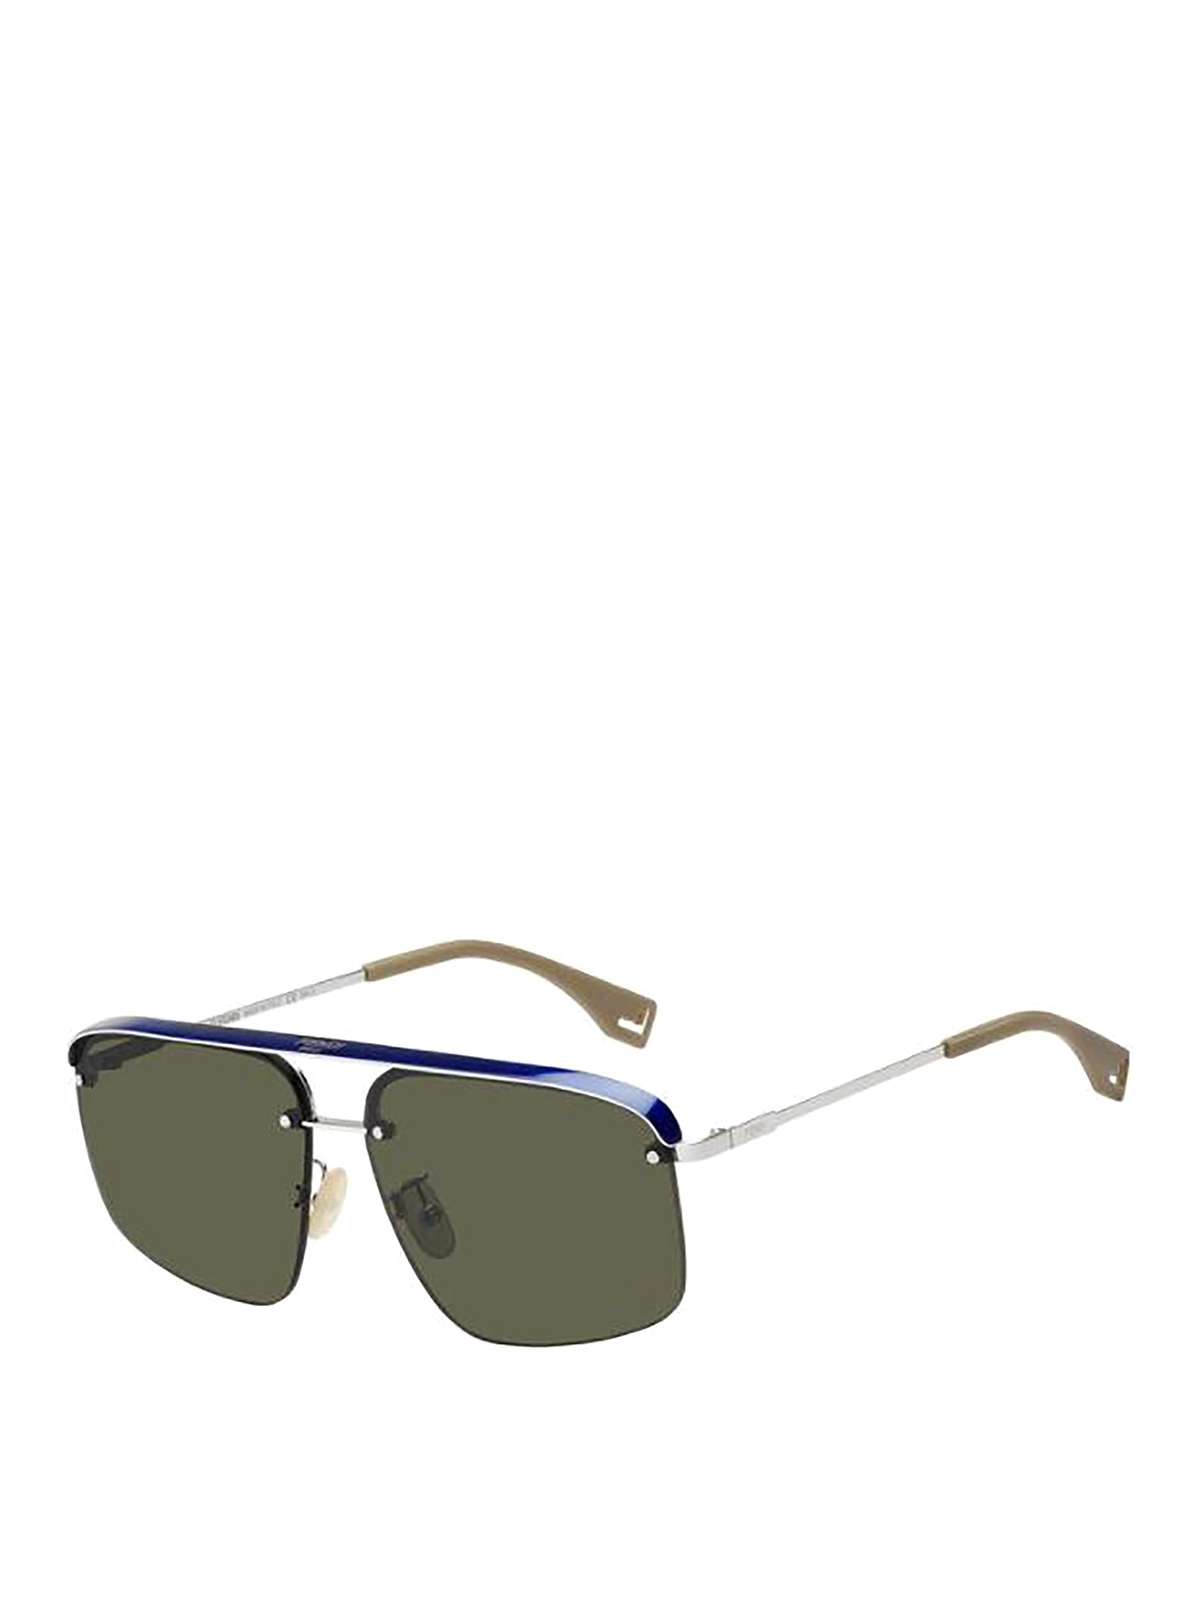 Fendi Pack Sunglasses In Grey